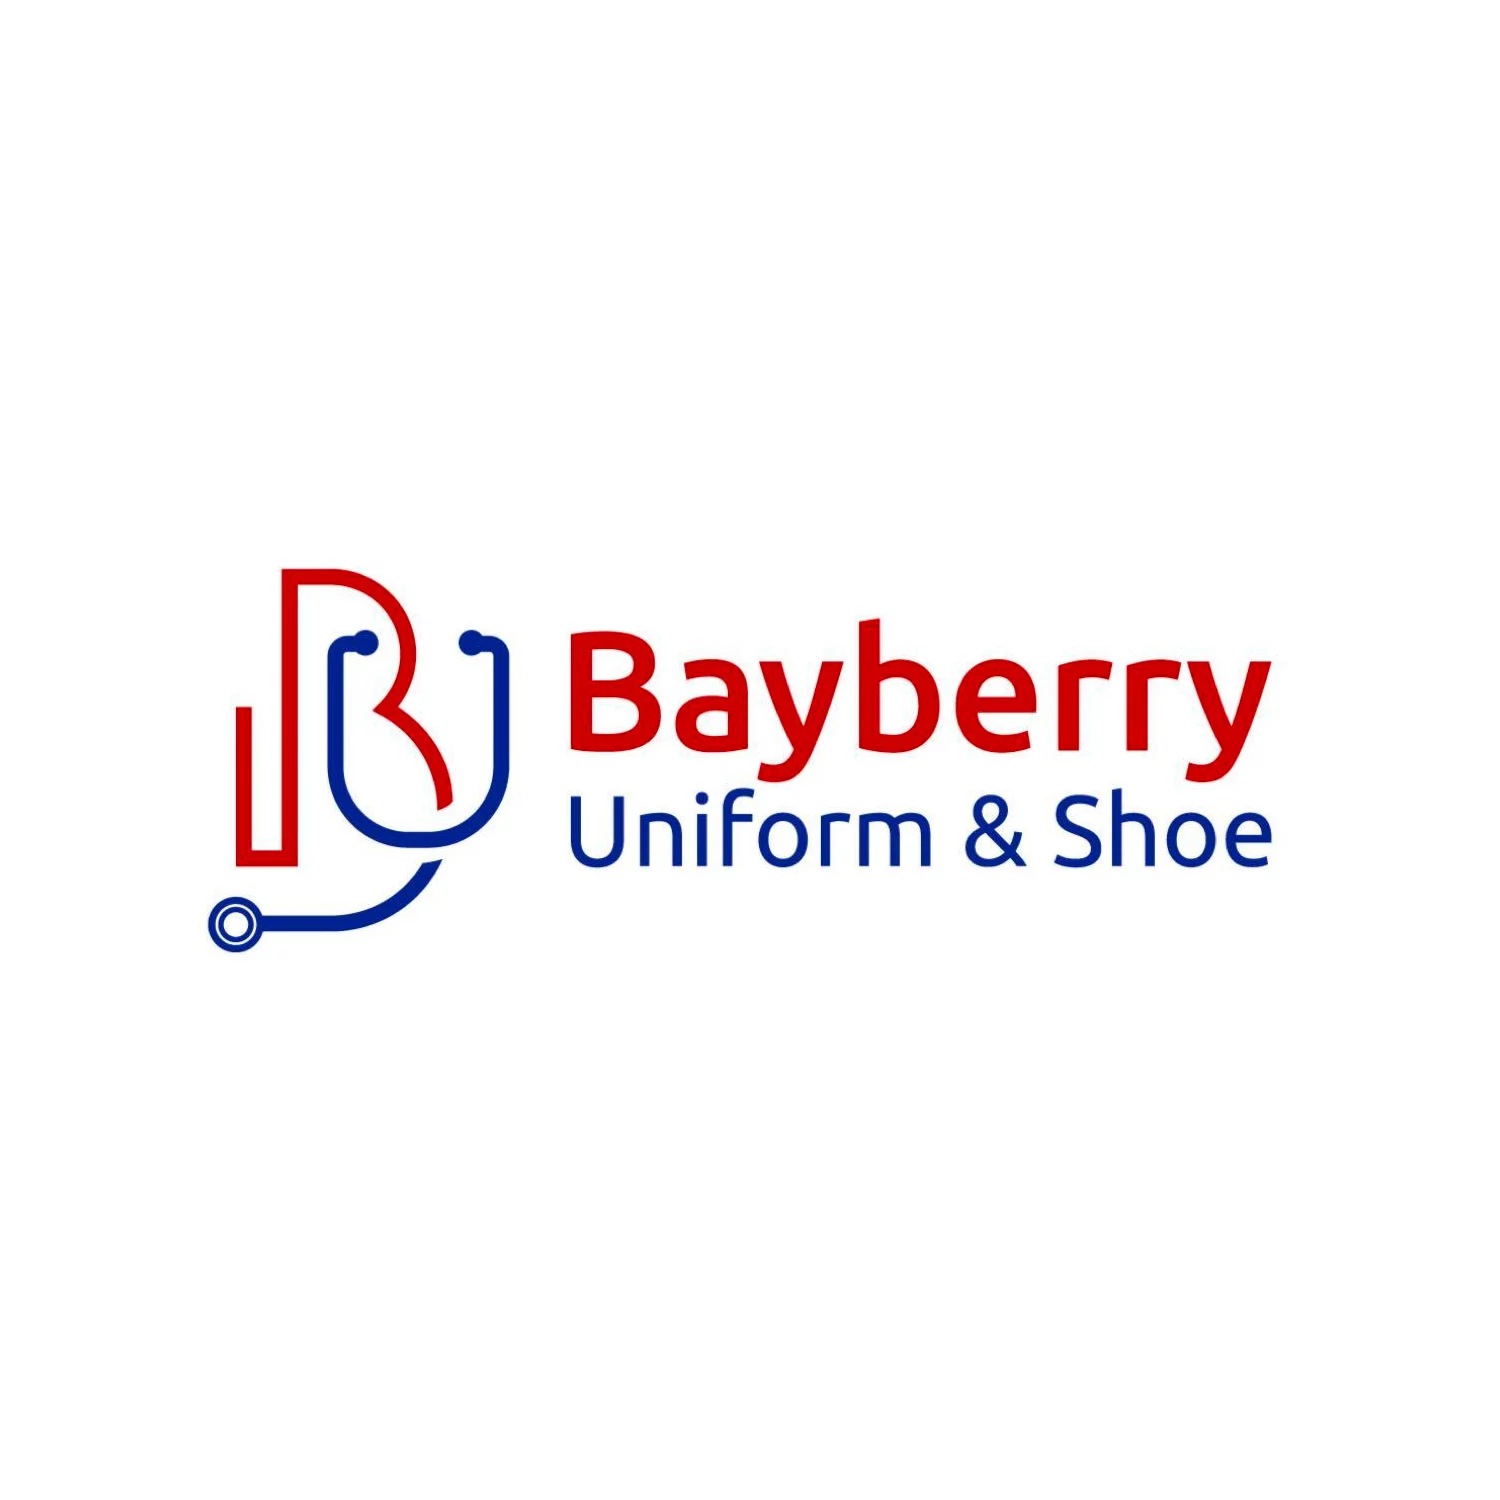 Bayberry Uniform